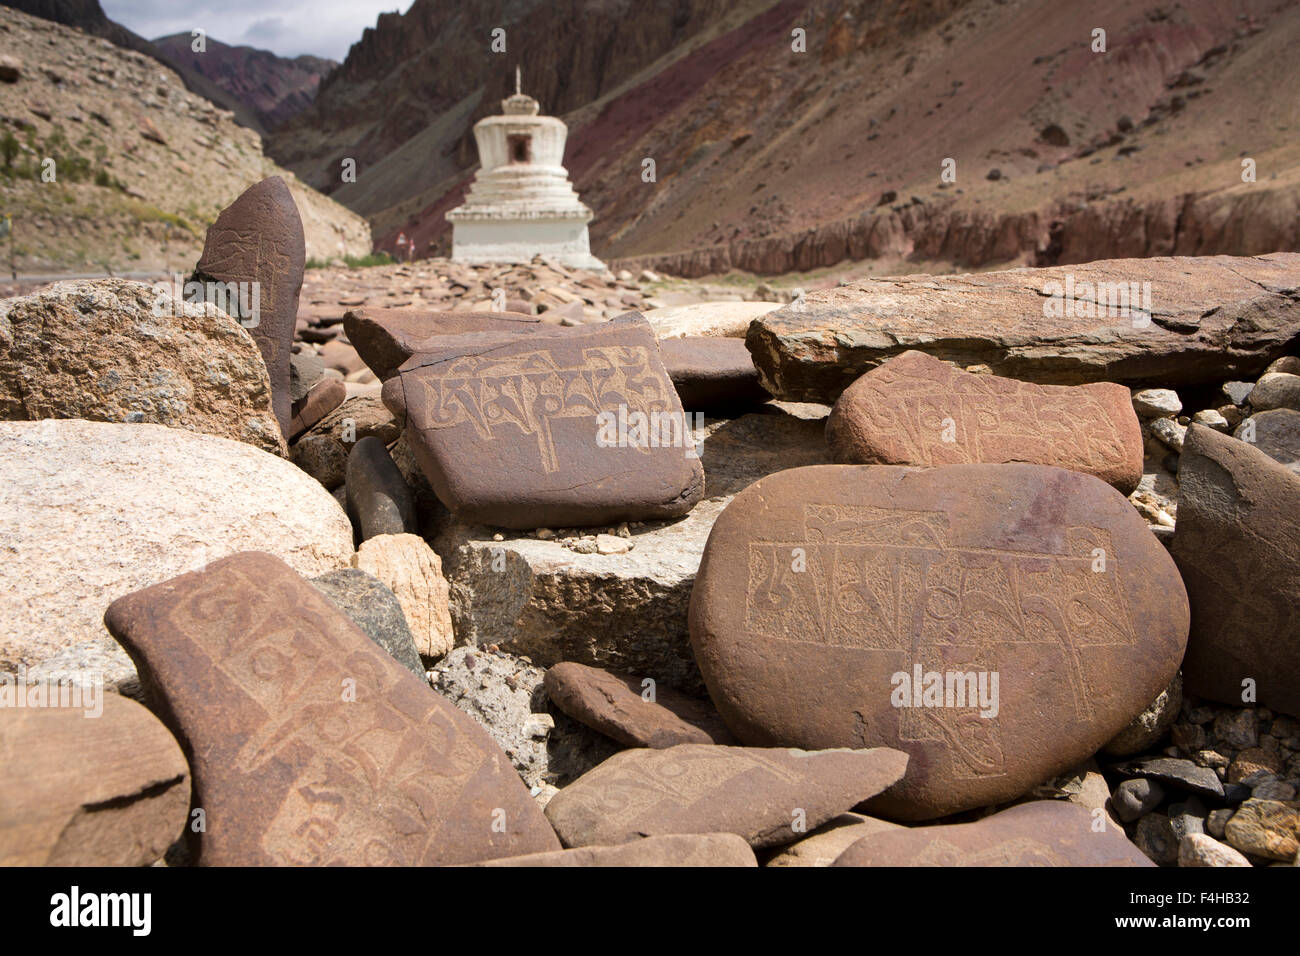 India, Jammu & Kashmir, Ladakh, Miru, mani stones with mantra inscribed in Tibetan Script Stock Photo